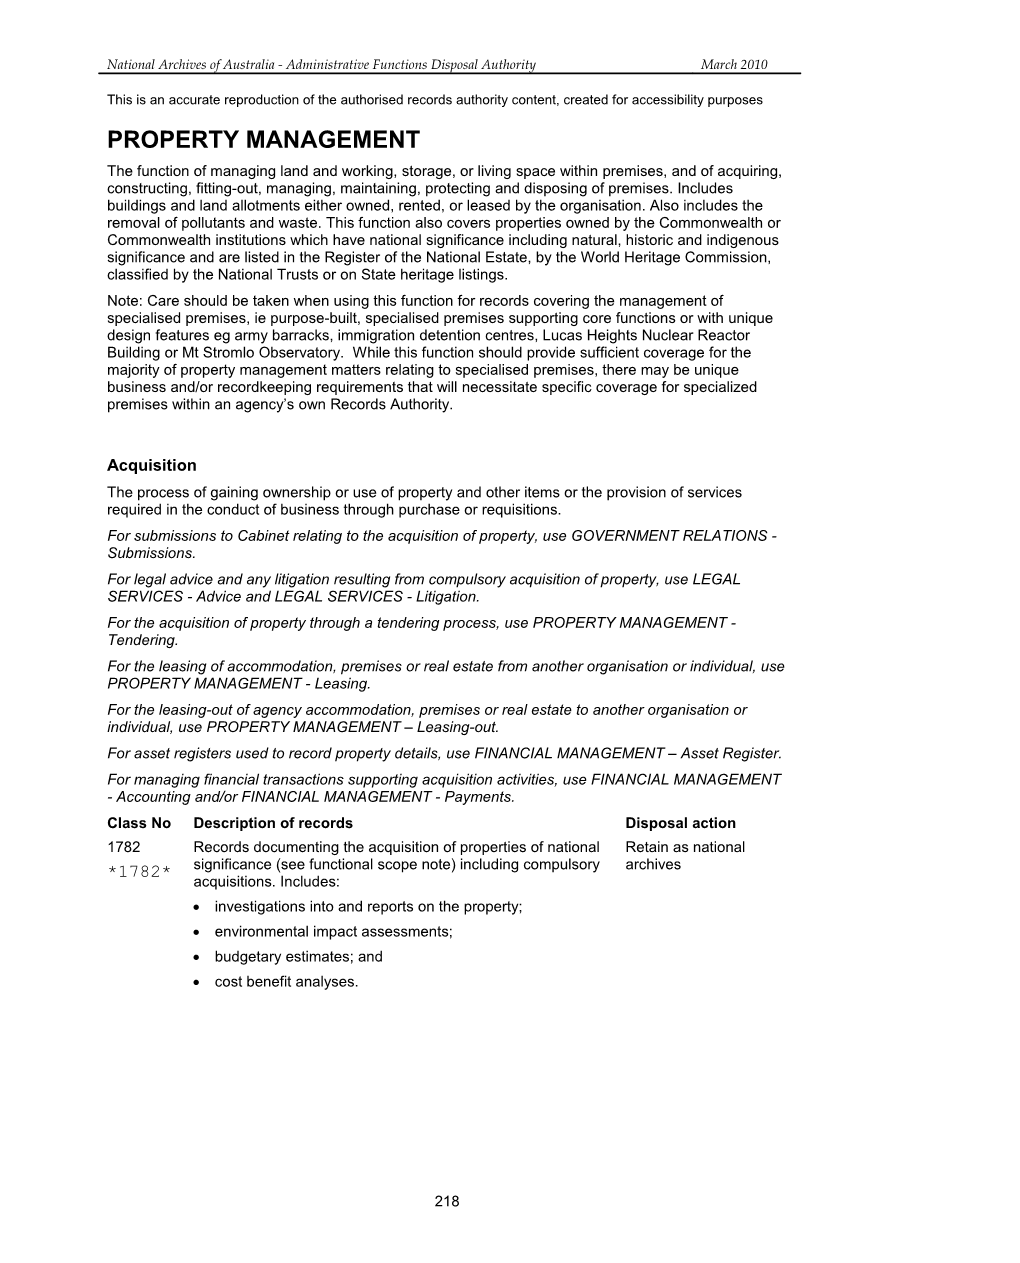 AFDA 2010 - Property Management